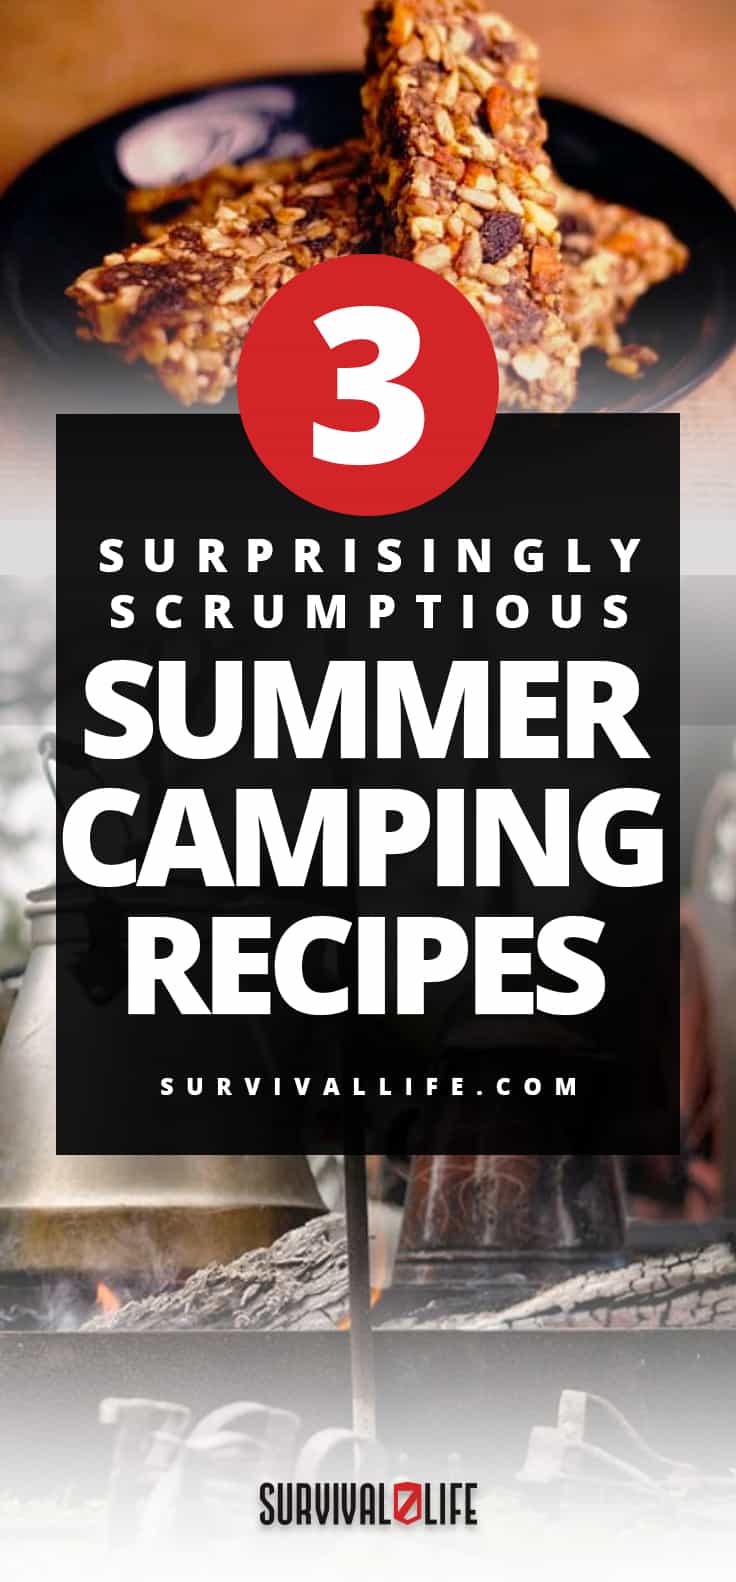 3 Surprisingly Scrumptious Summer Camping Recipes